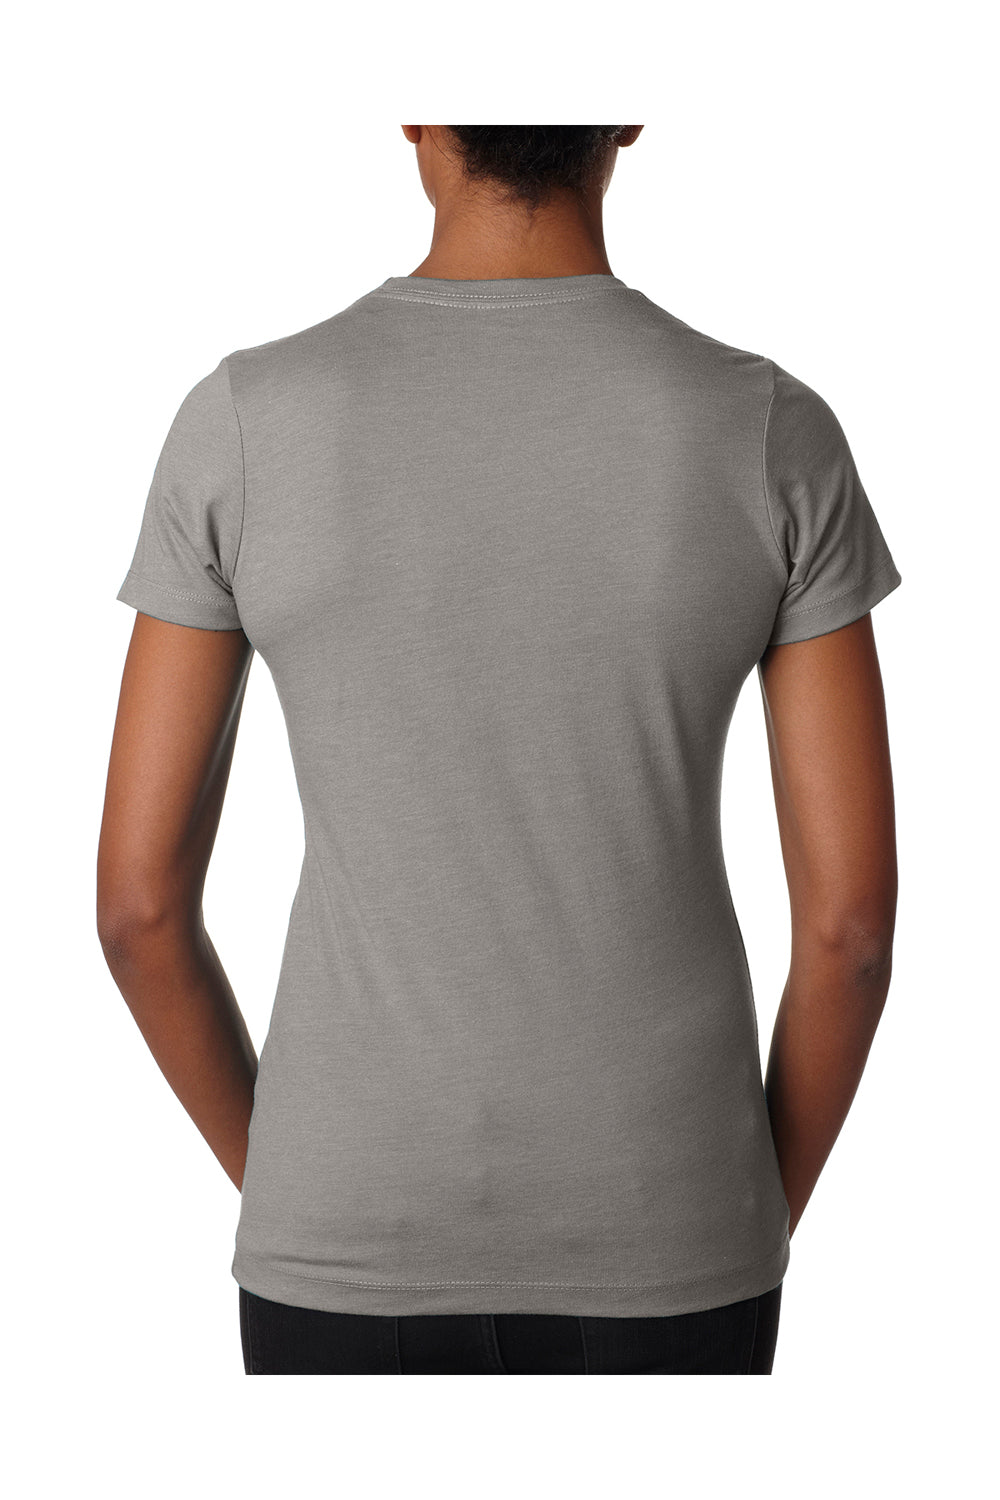 Next Level 6610 Womens CVC Jersey Short Sleeve Crewneck T-Shirt Stone Grey Back